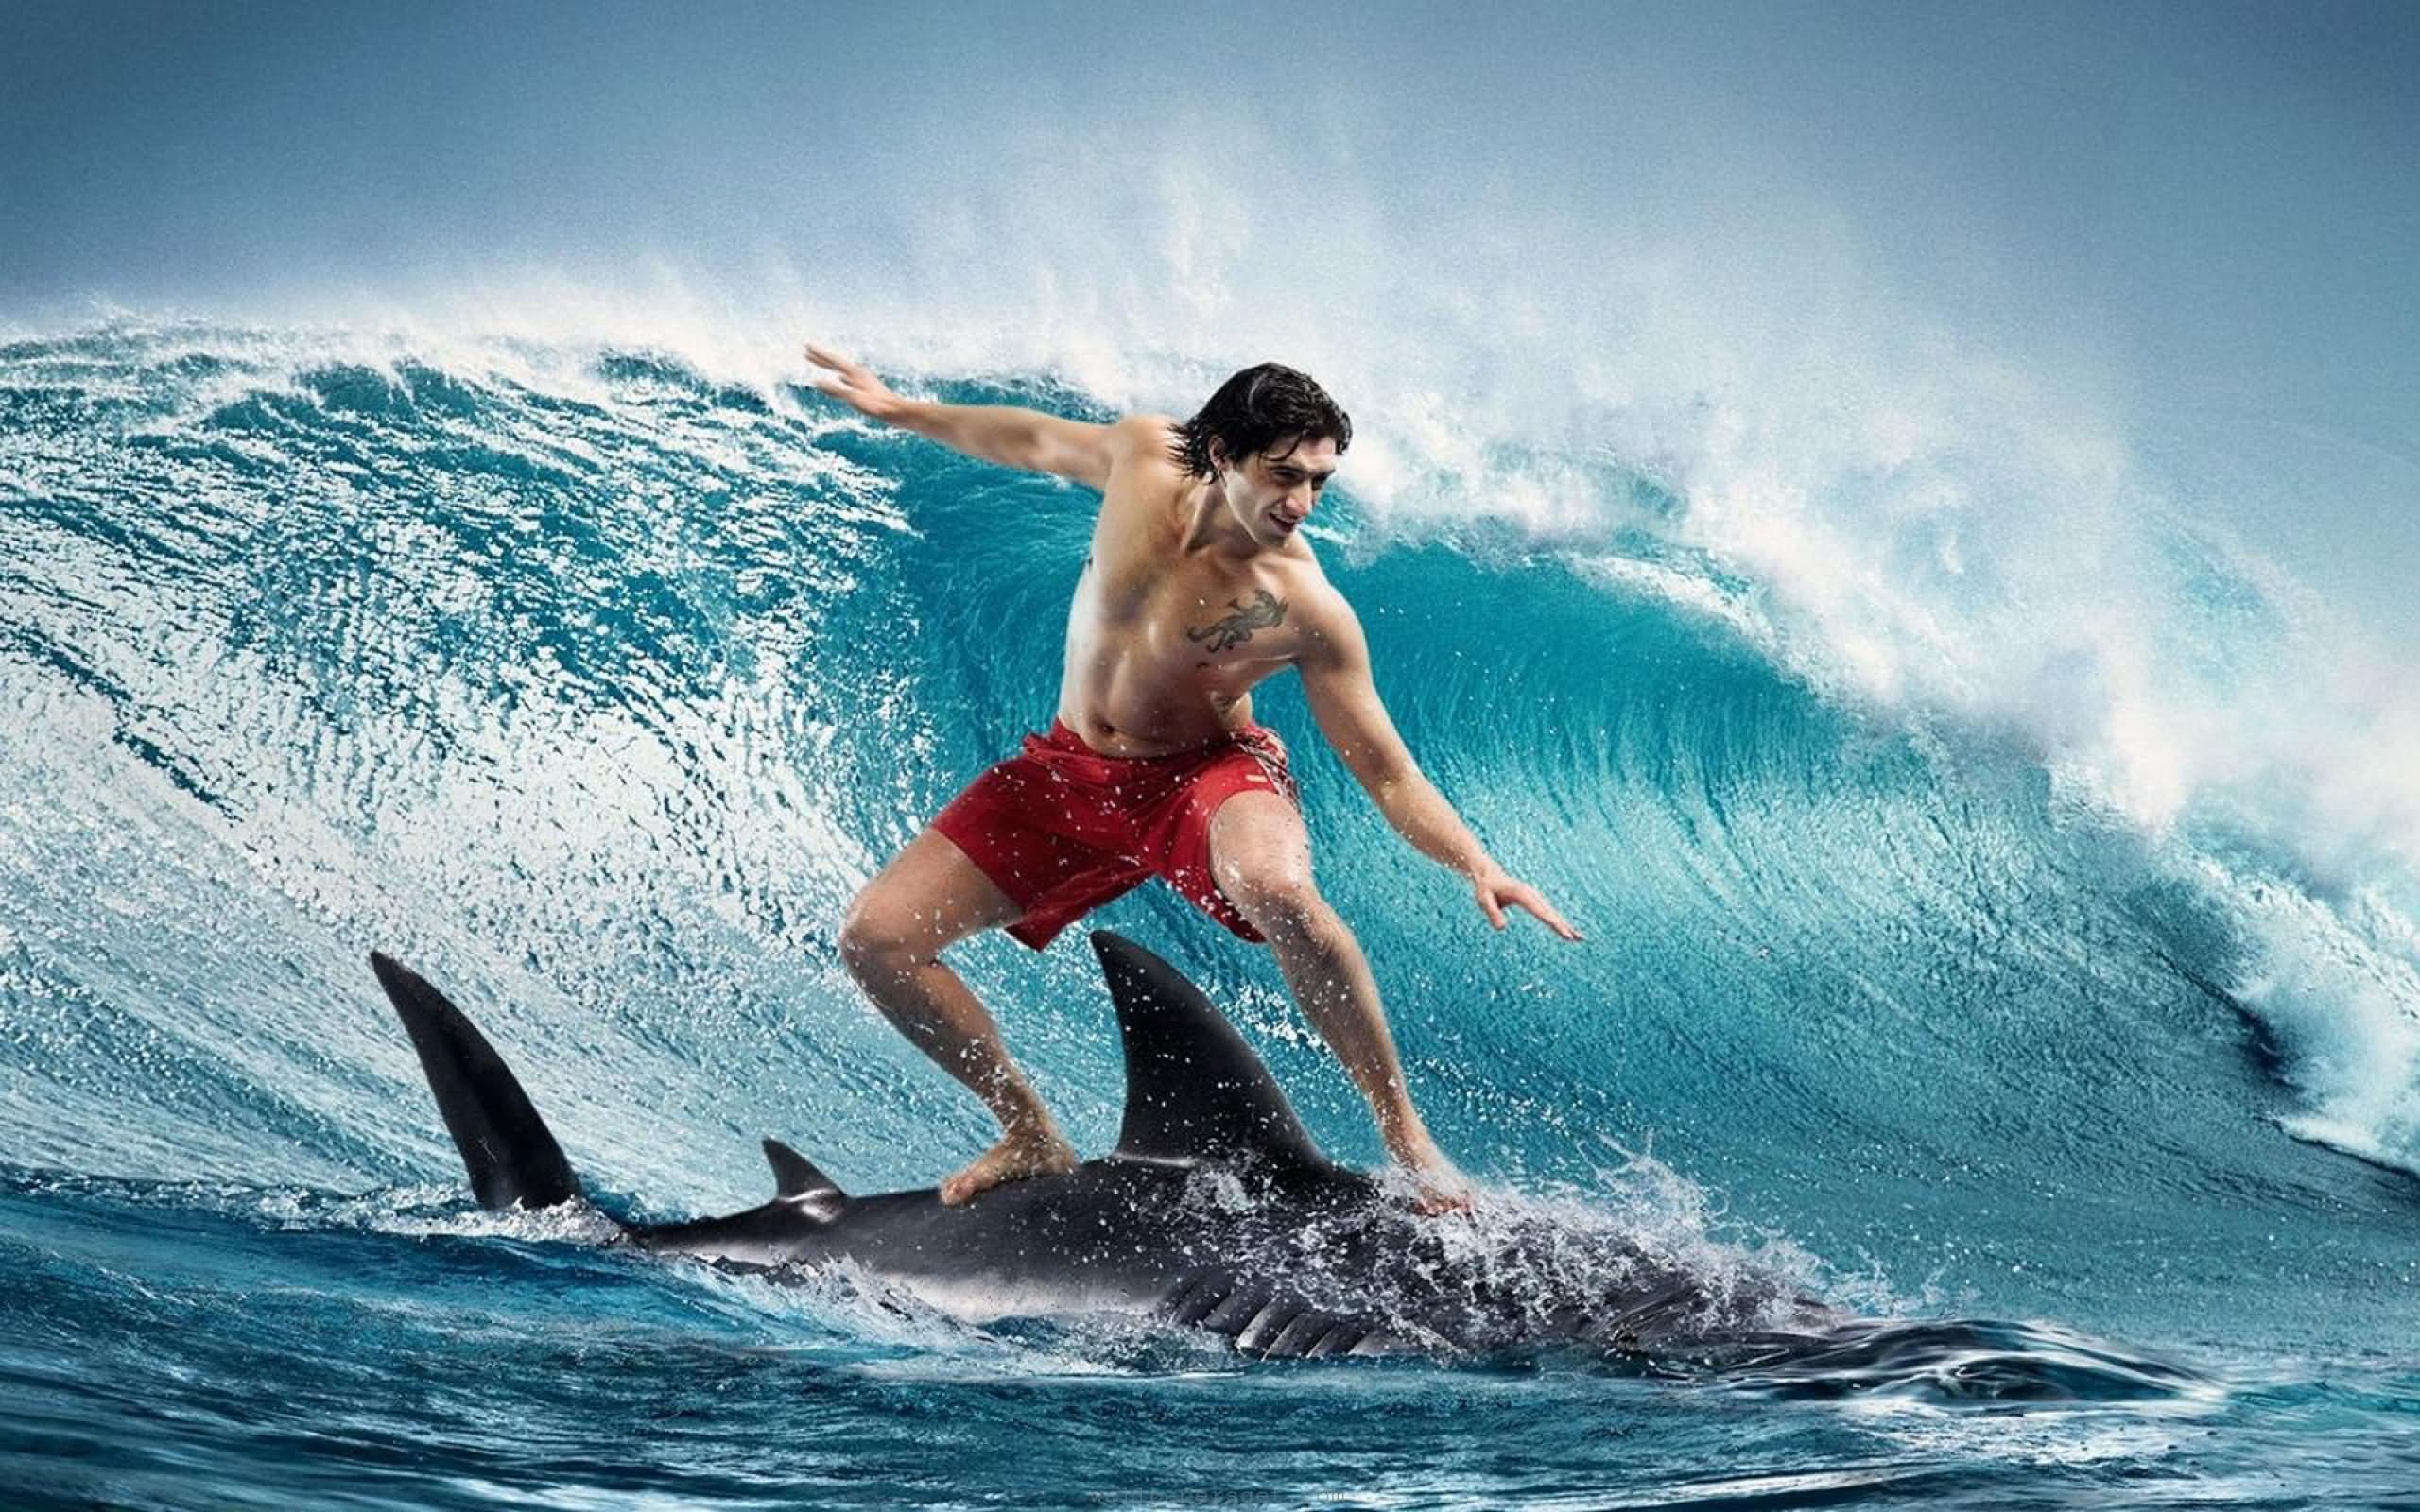 Man On Shark Fish Funny Surfing Image